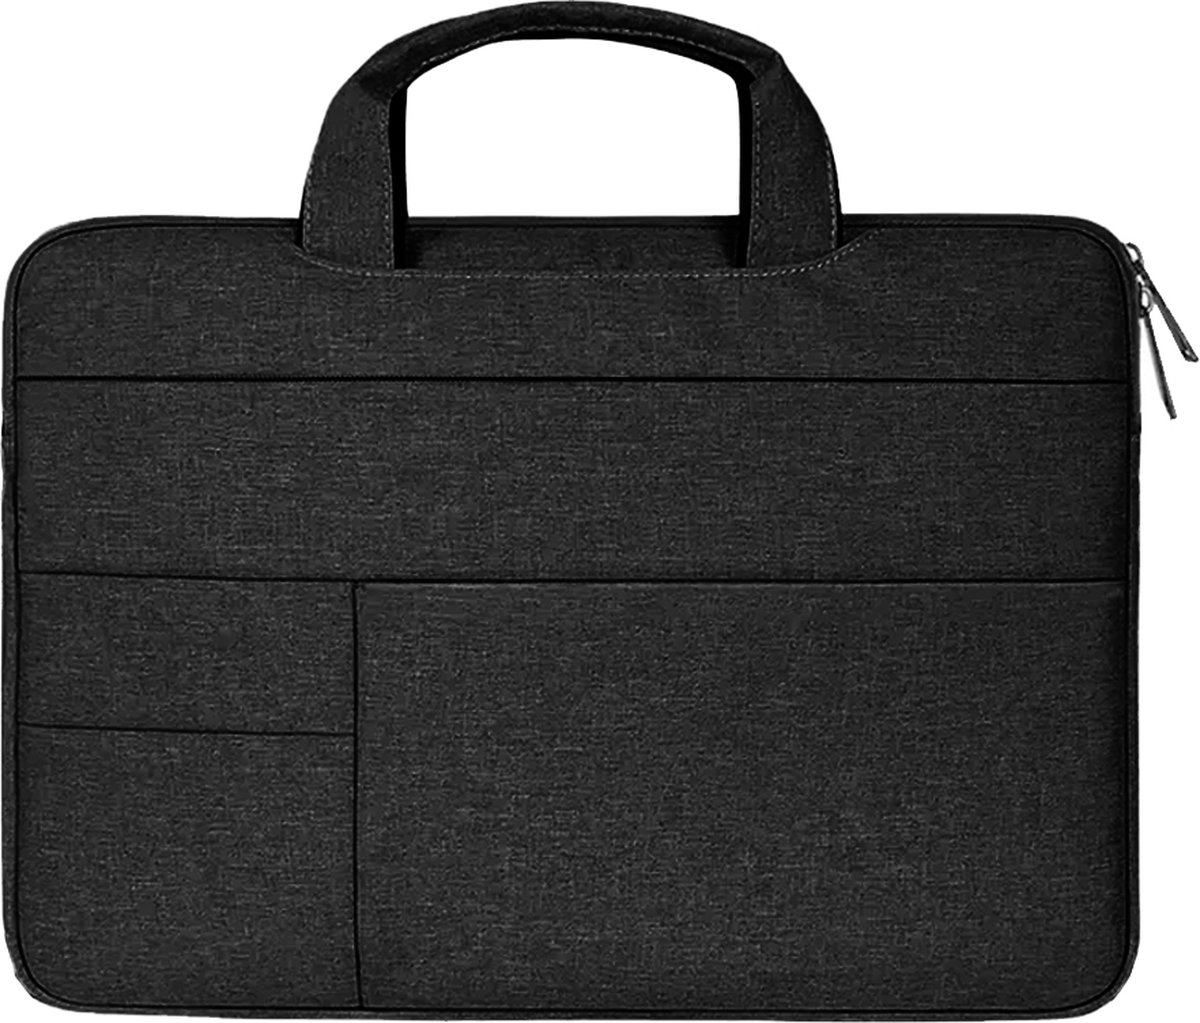 Case2go - Laptophoes geschikt voor Dell Vostro - Laptoptas 14 inch - Spatwaterdicht - Met Handvat - Zwart